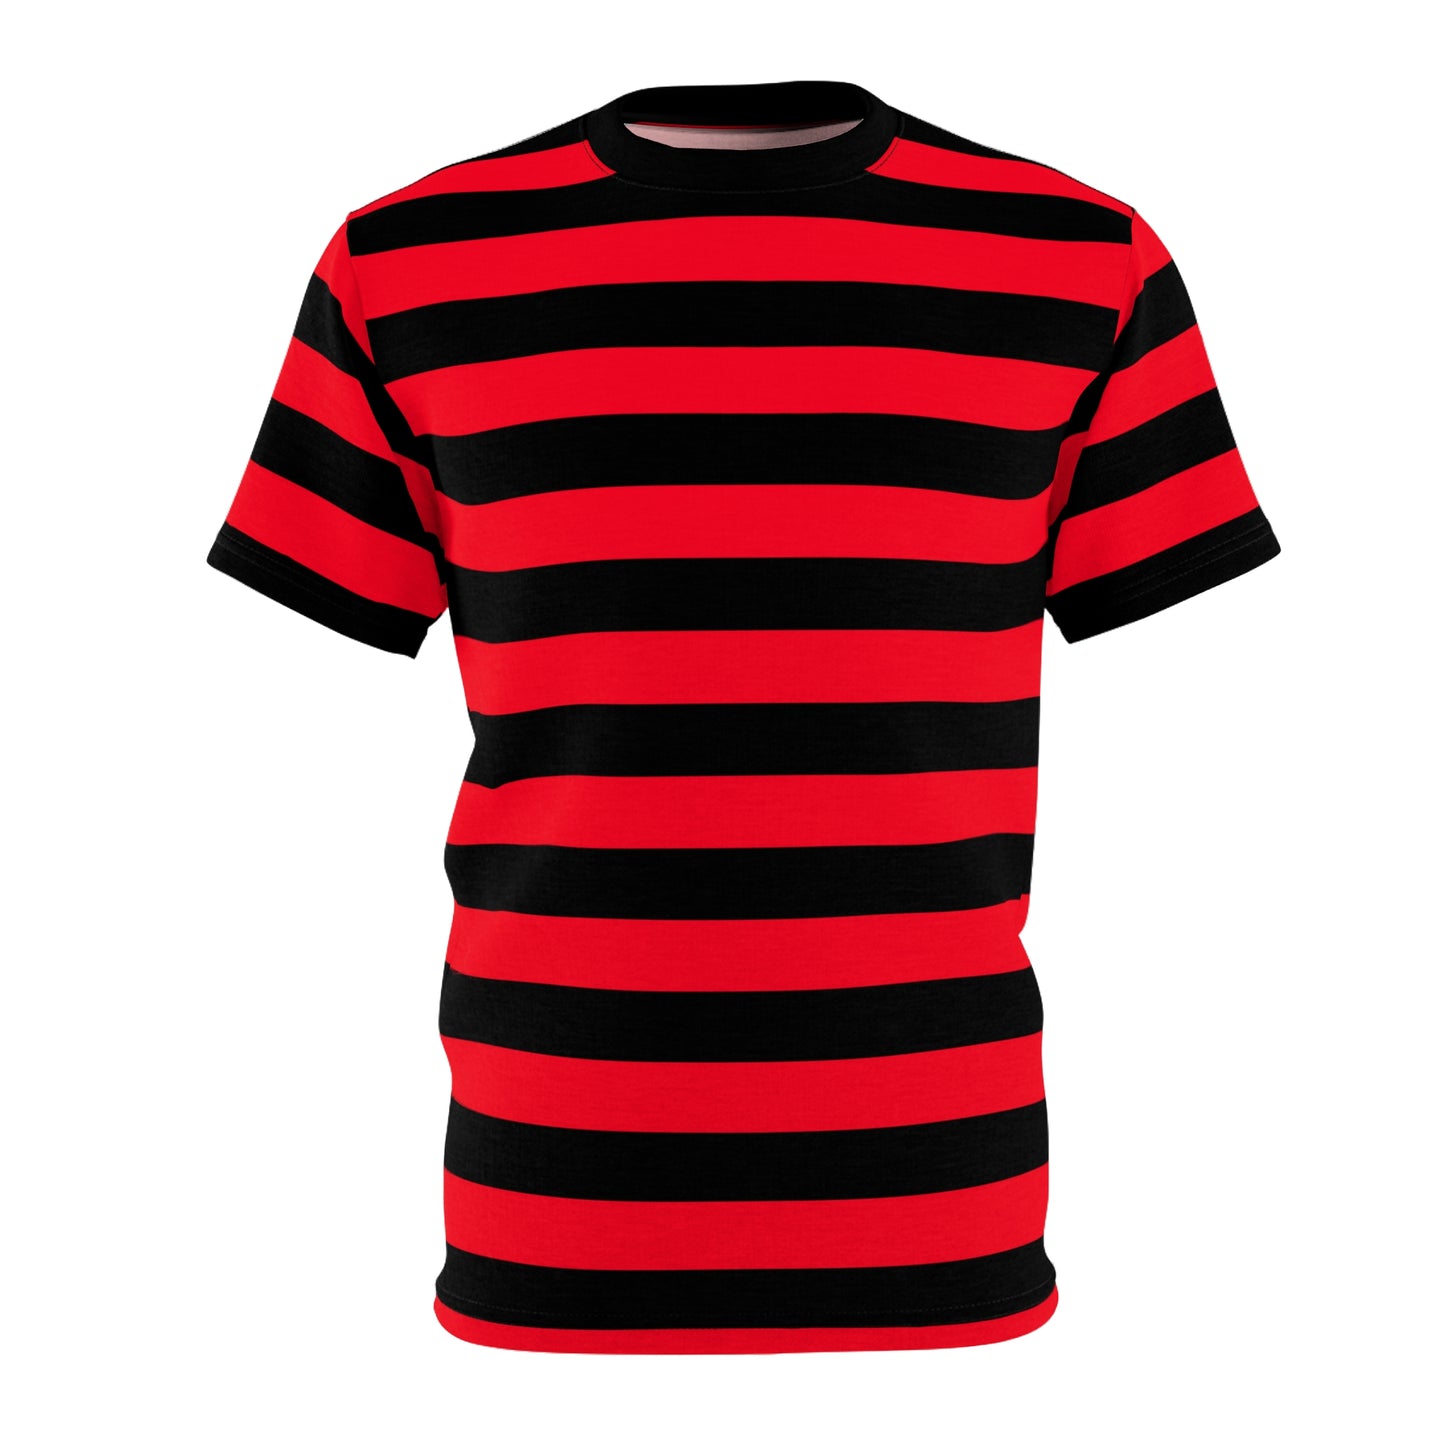 Red and Black Striped Men Tshirt, Horizontal Bold Stripes Designer Lightweight Heavyweight Aesthetic Fashion Crewneck Tee Top Shirt Starcove Fashion